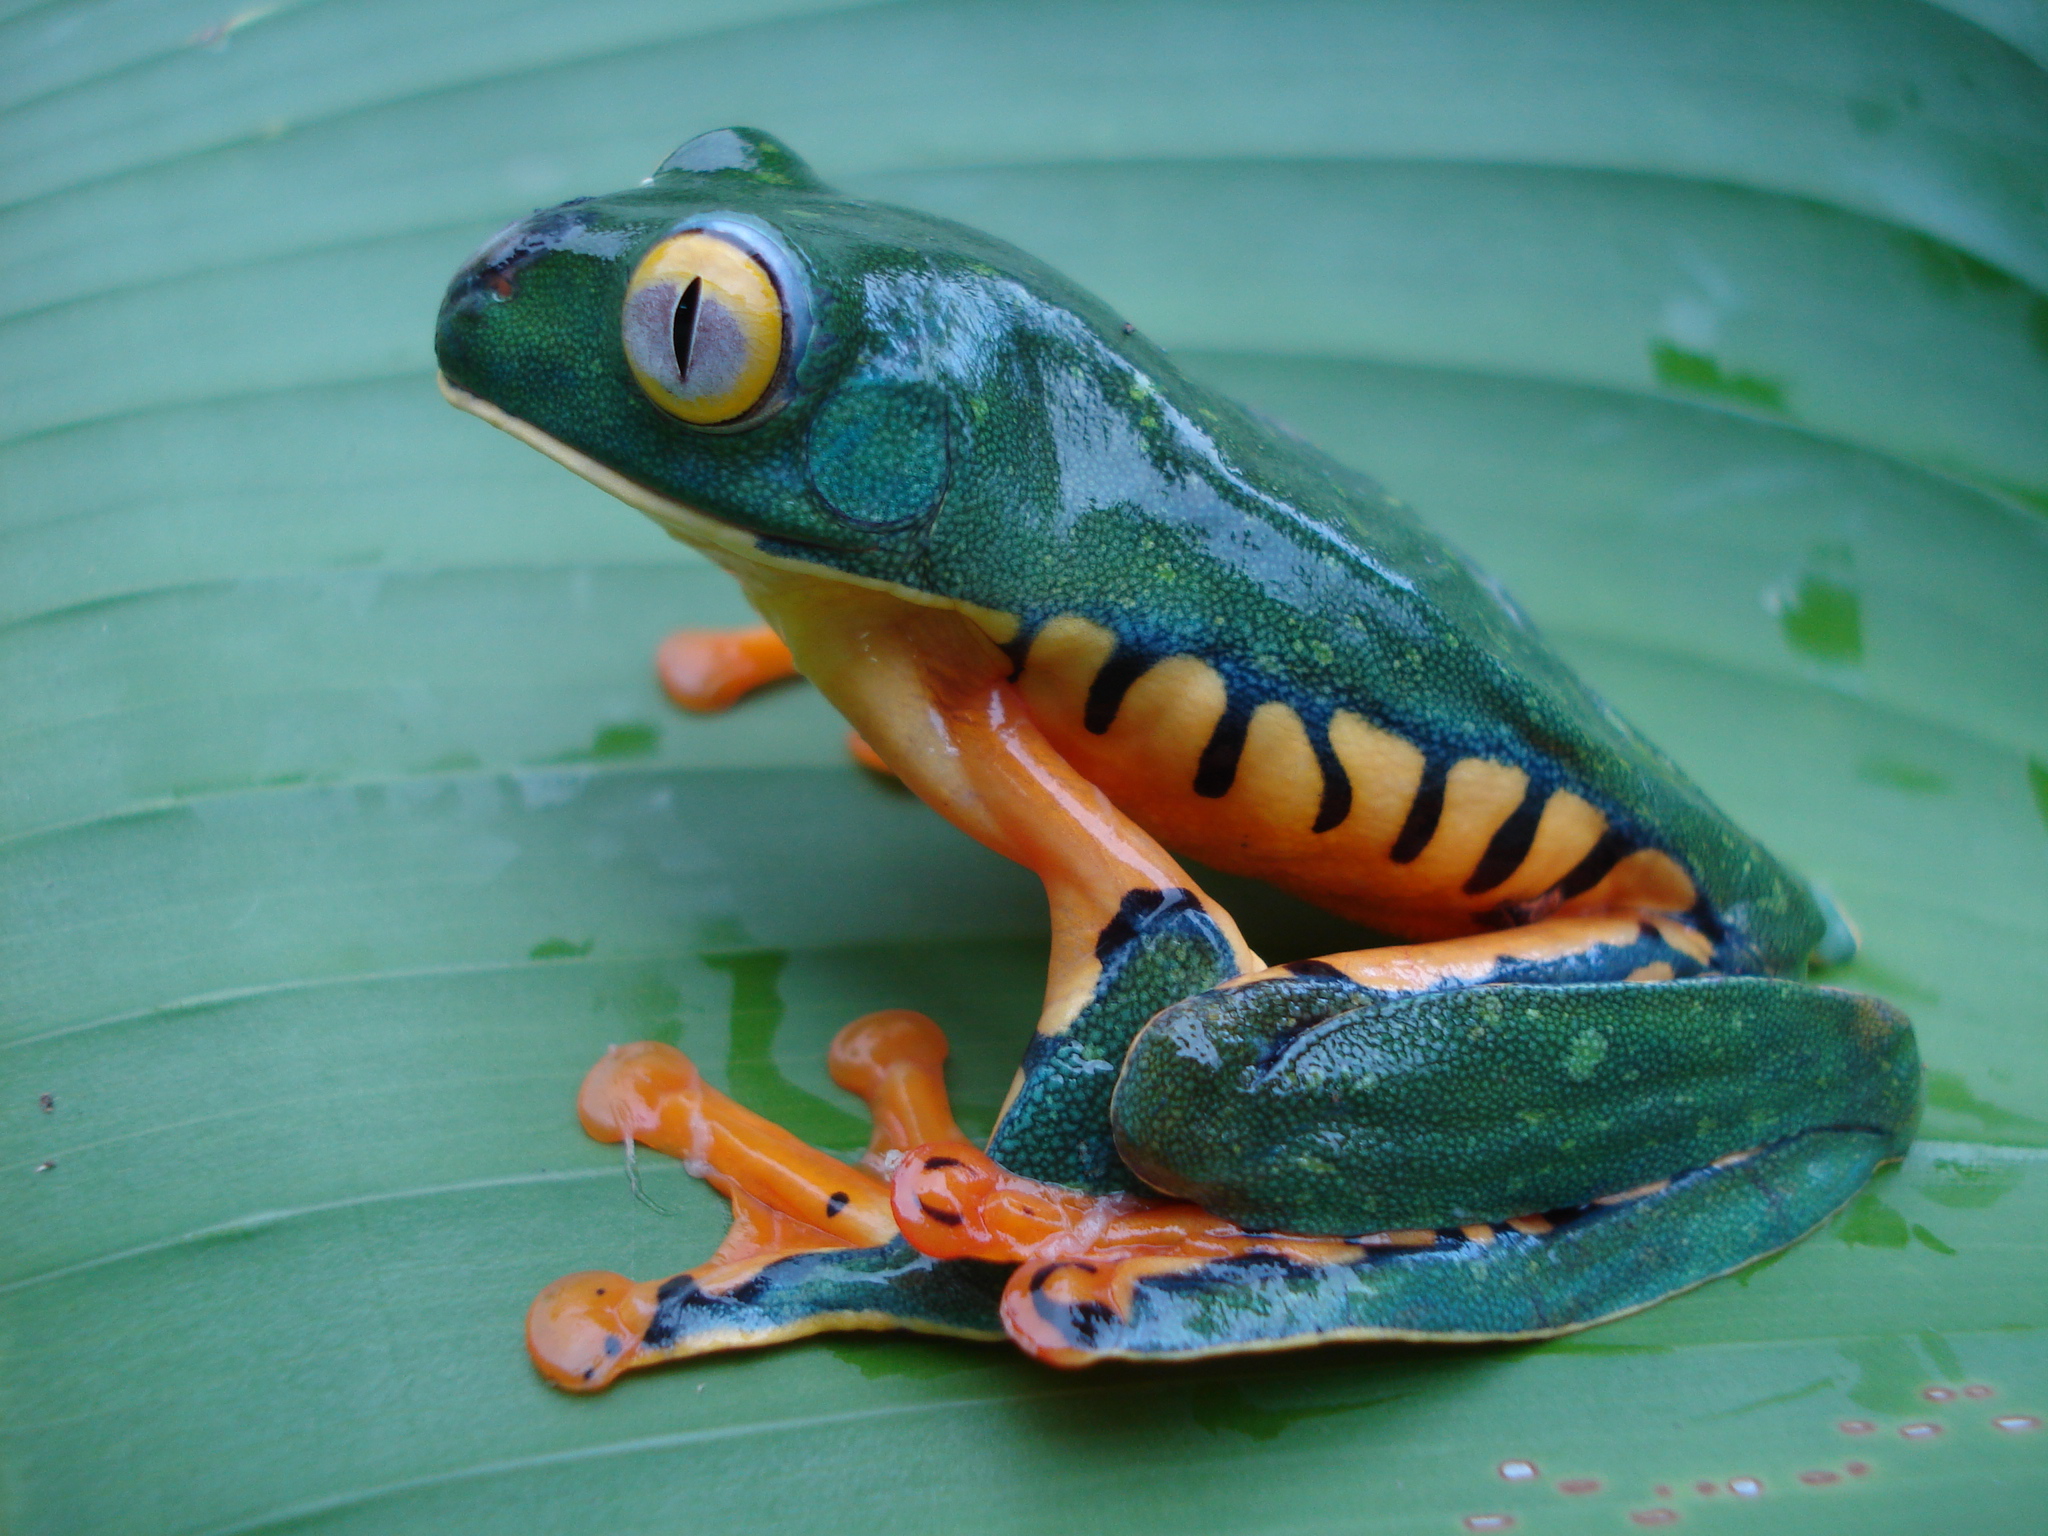 Educational programs focus on Costa Rica biodiversity - Tripatini